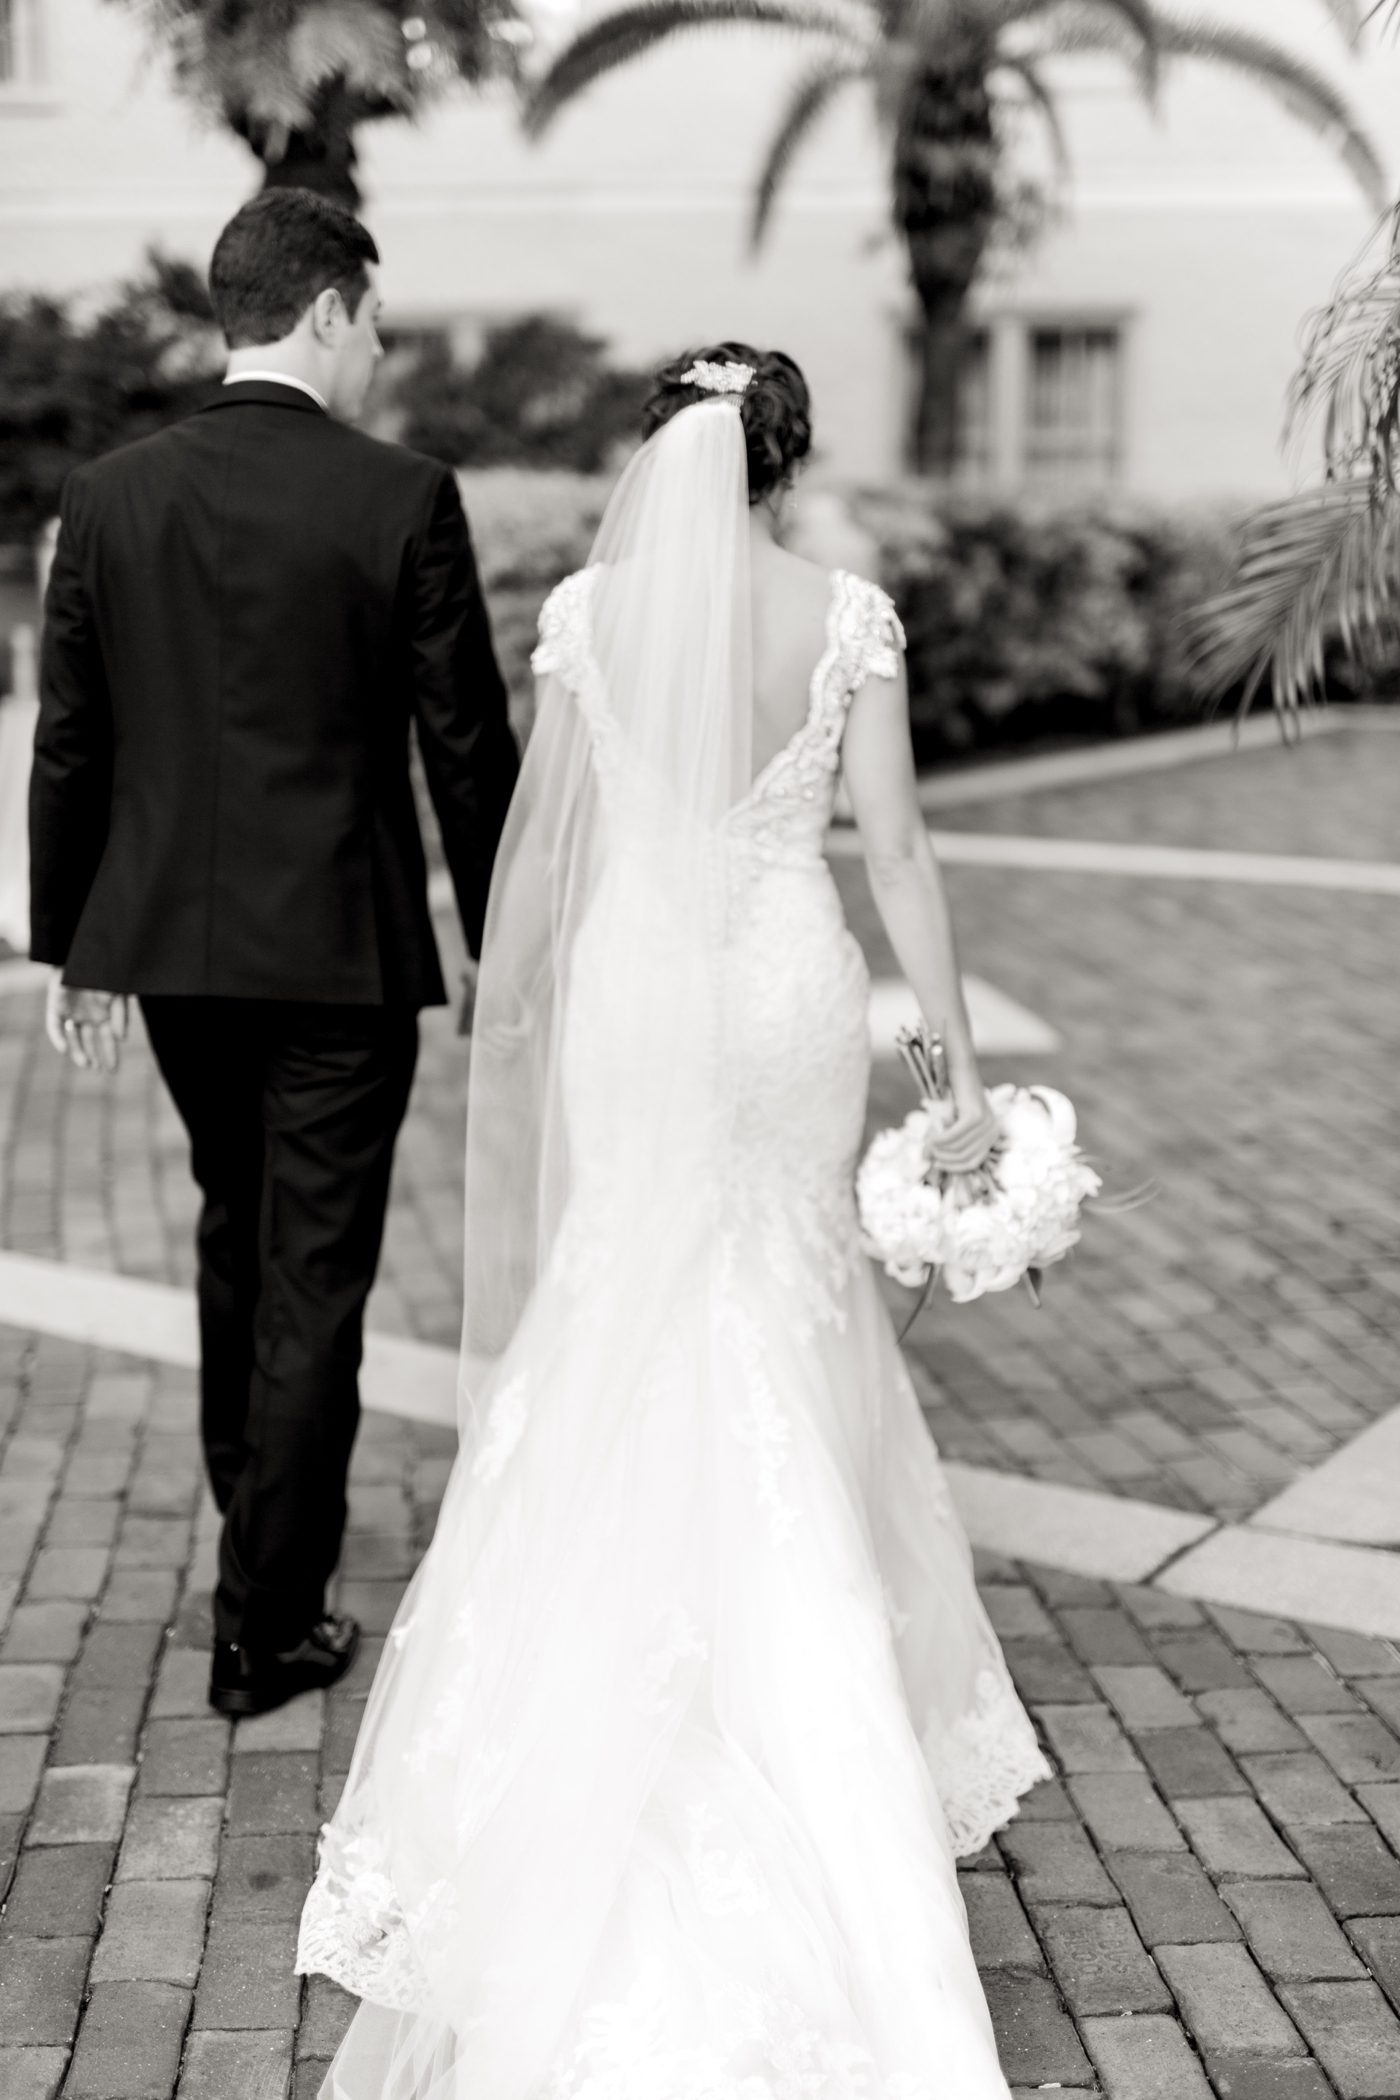 Vinoy renaissance wedding photos | St Petersburg FL wedding photographersCatherine Ann Photography